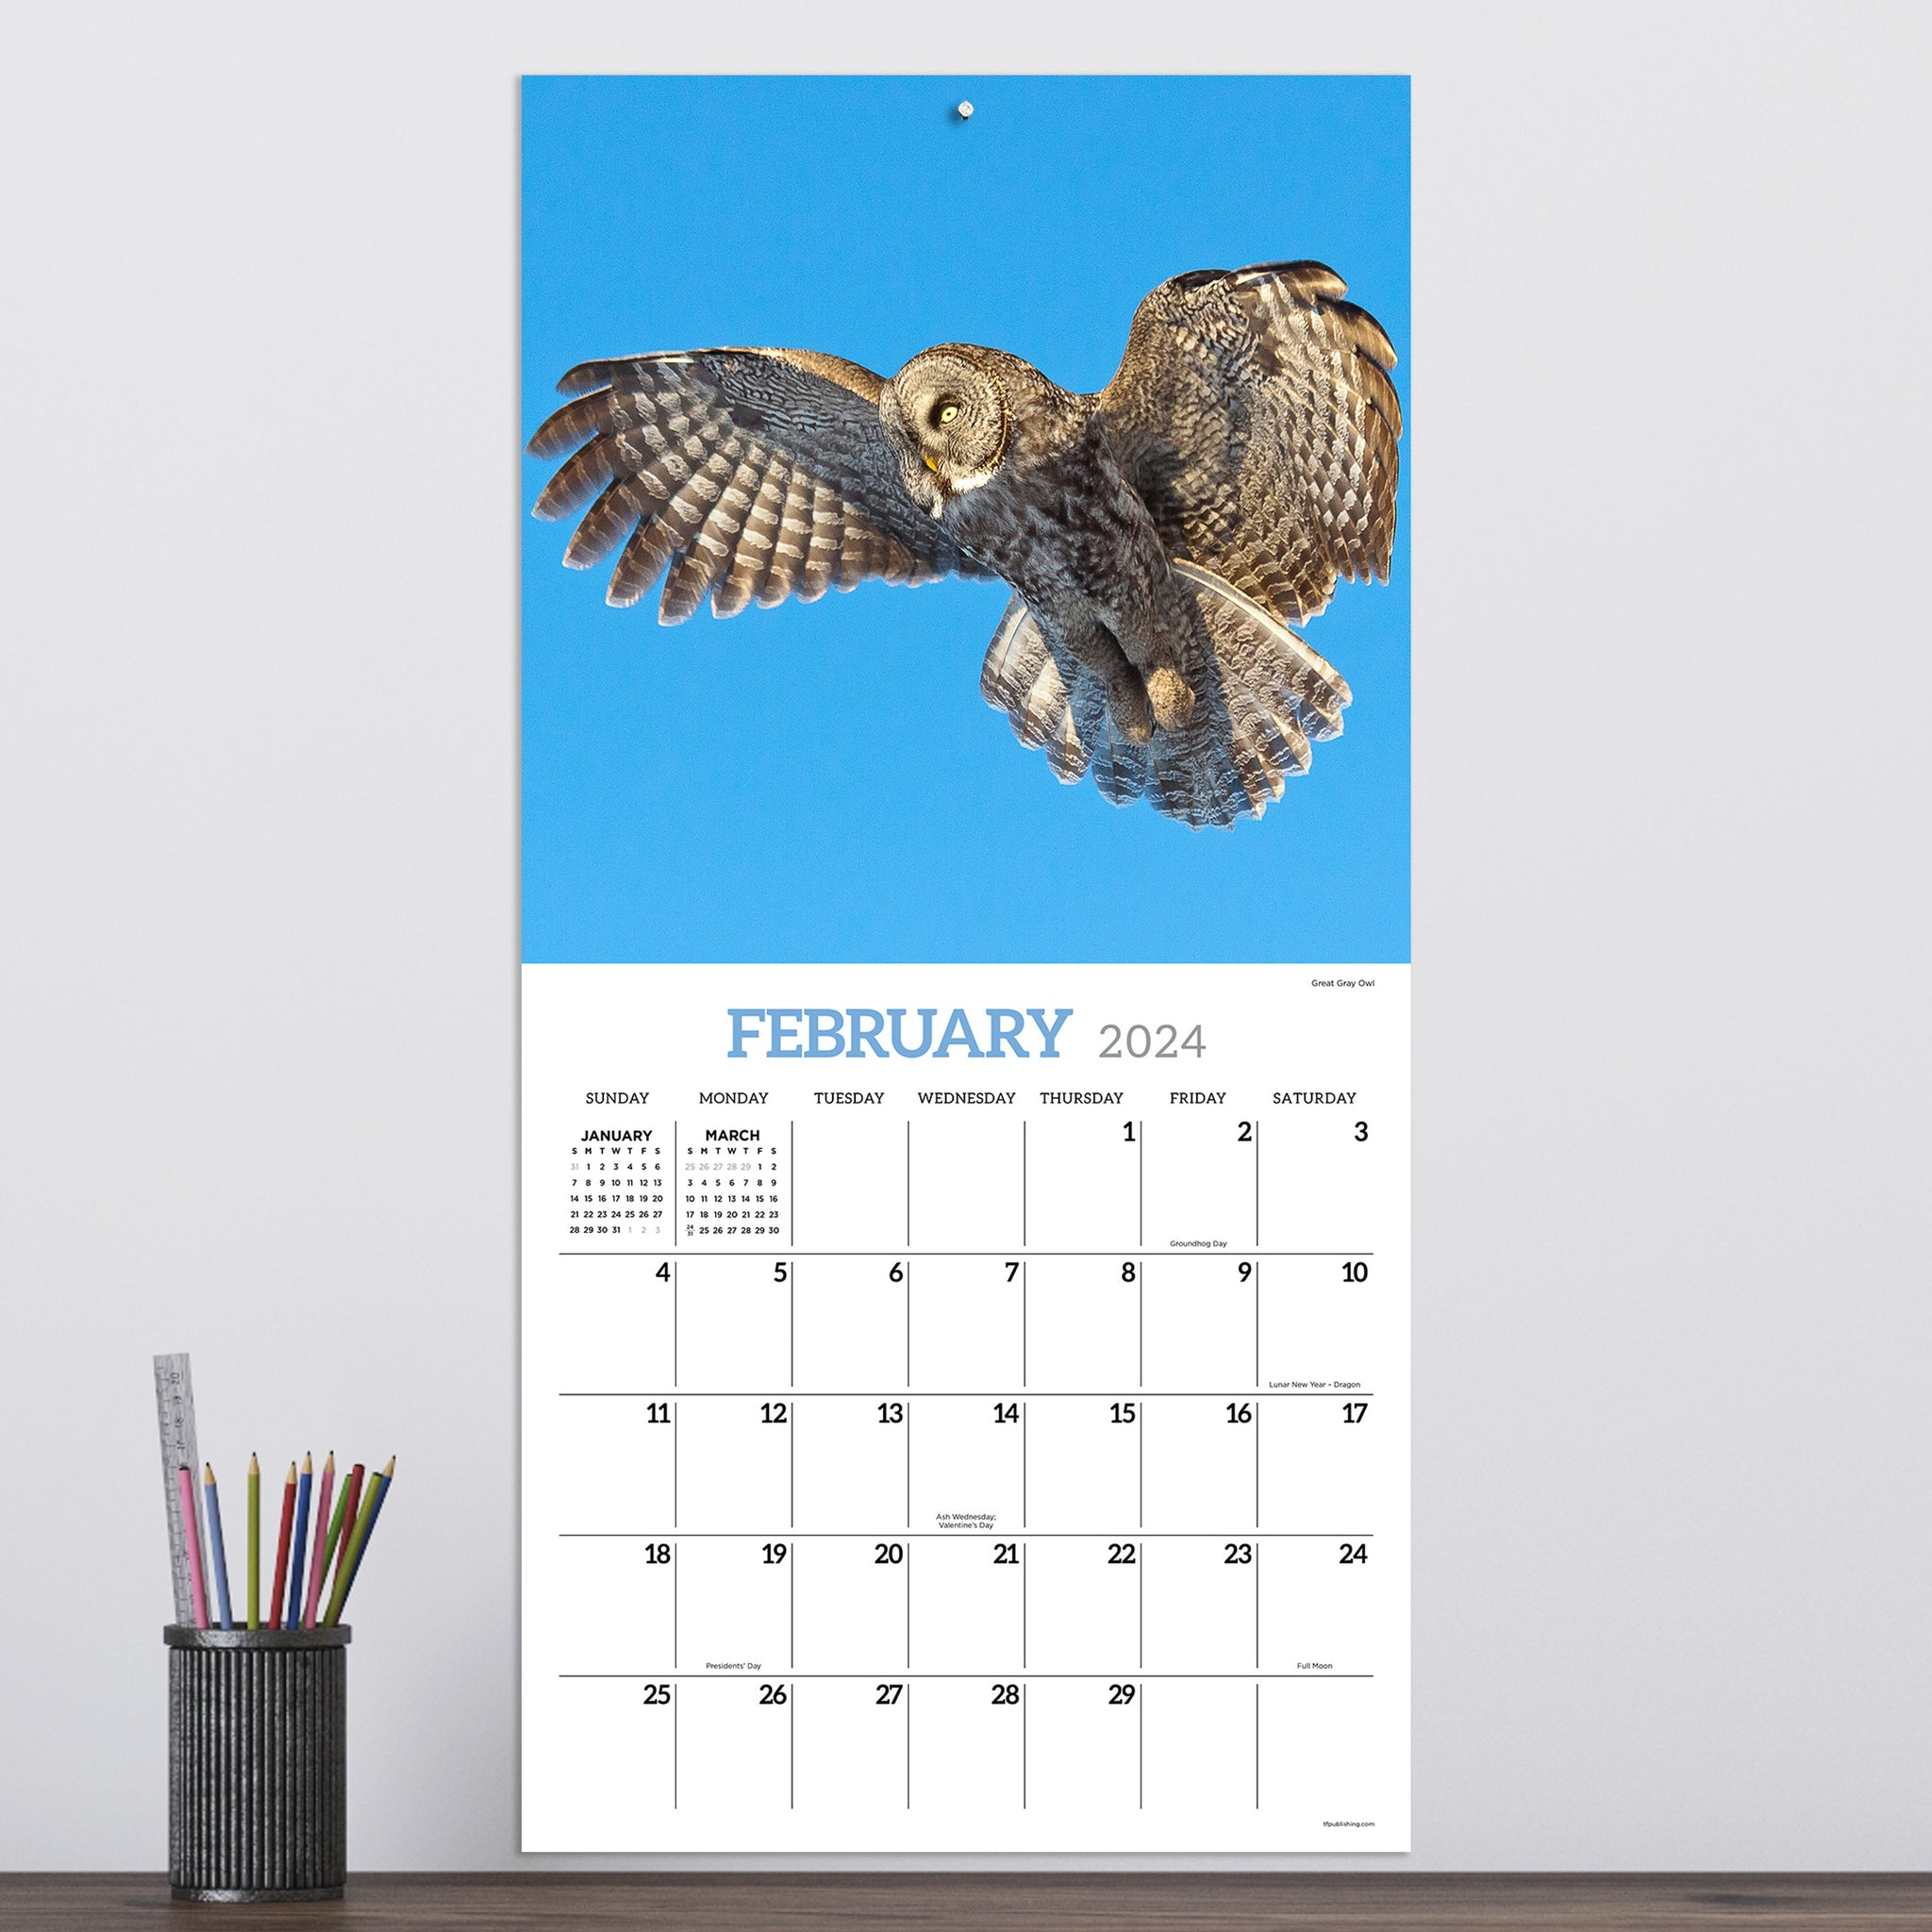 2024 Owls Wall Calendar TF Publishing Calendars + Planners